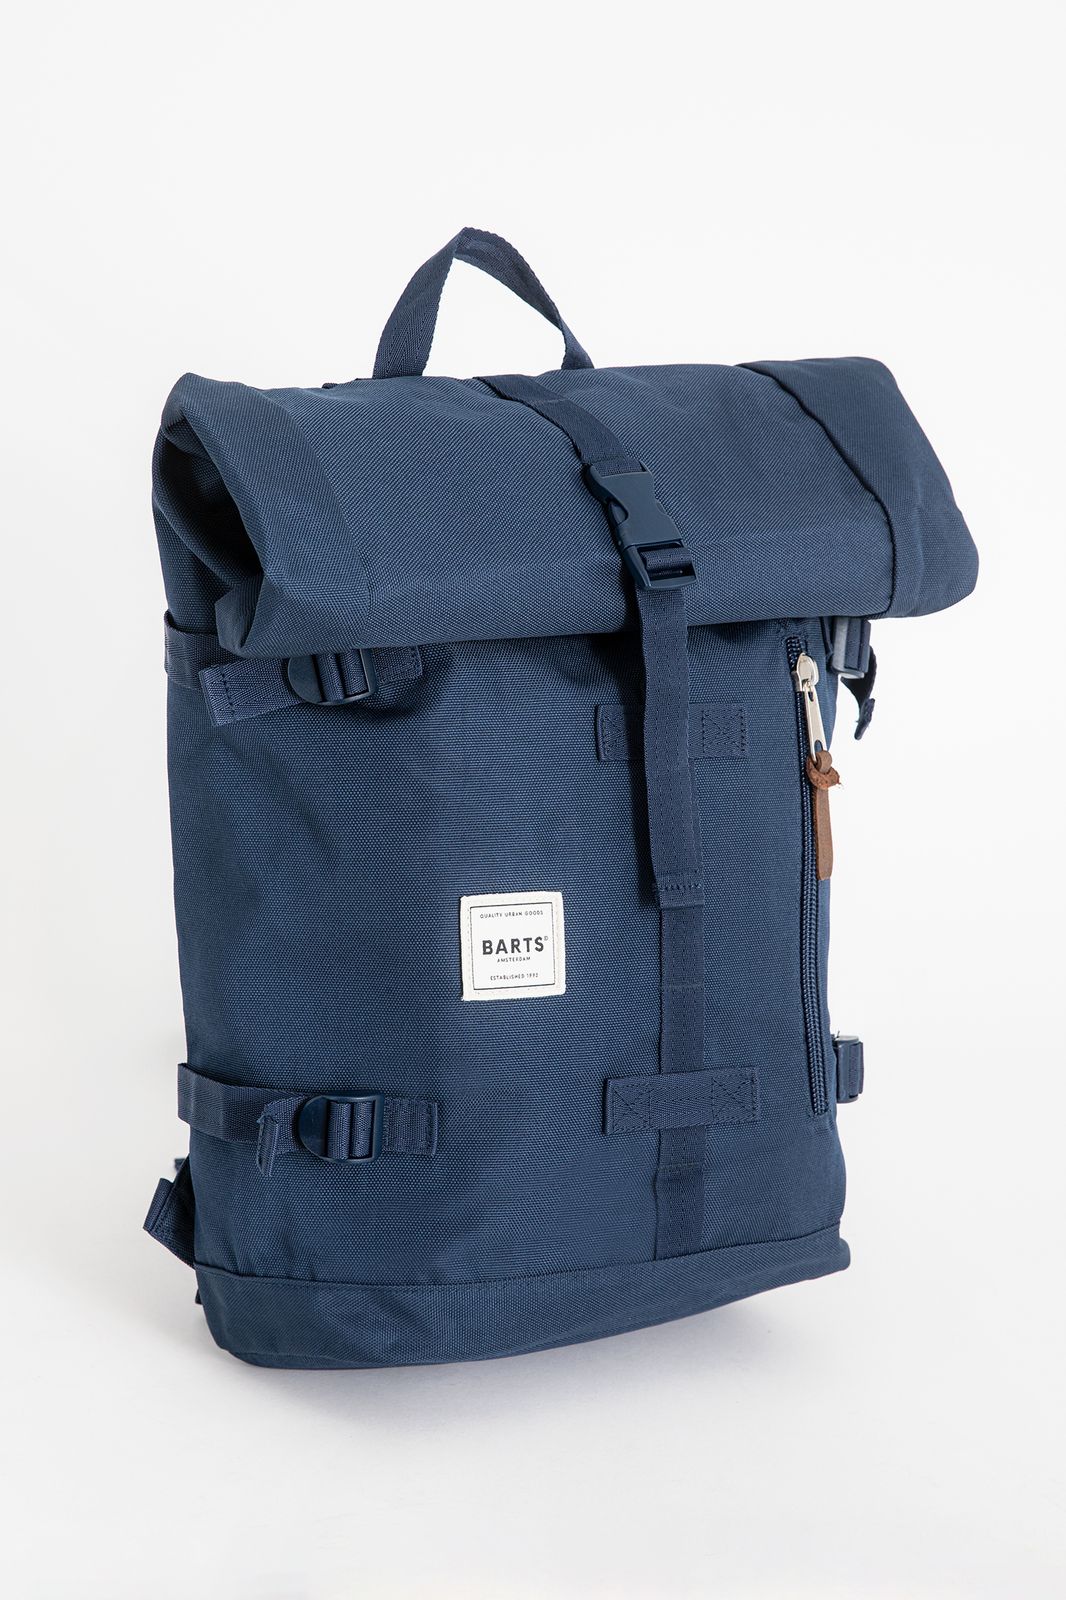 Barts Mountain Backpack - marineblau